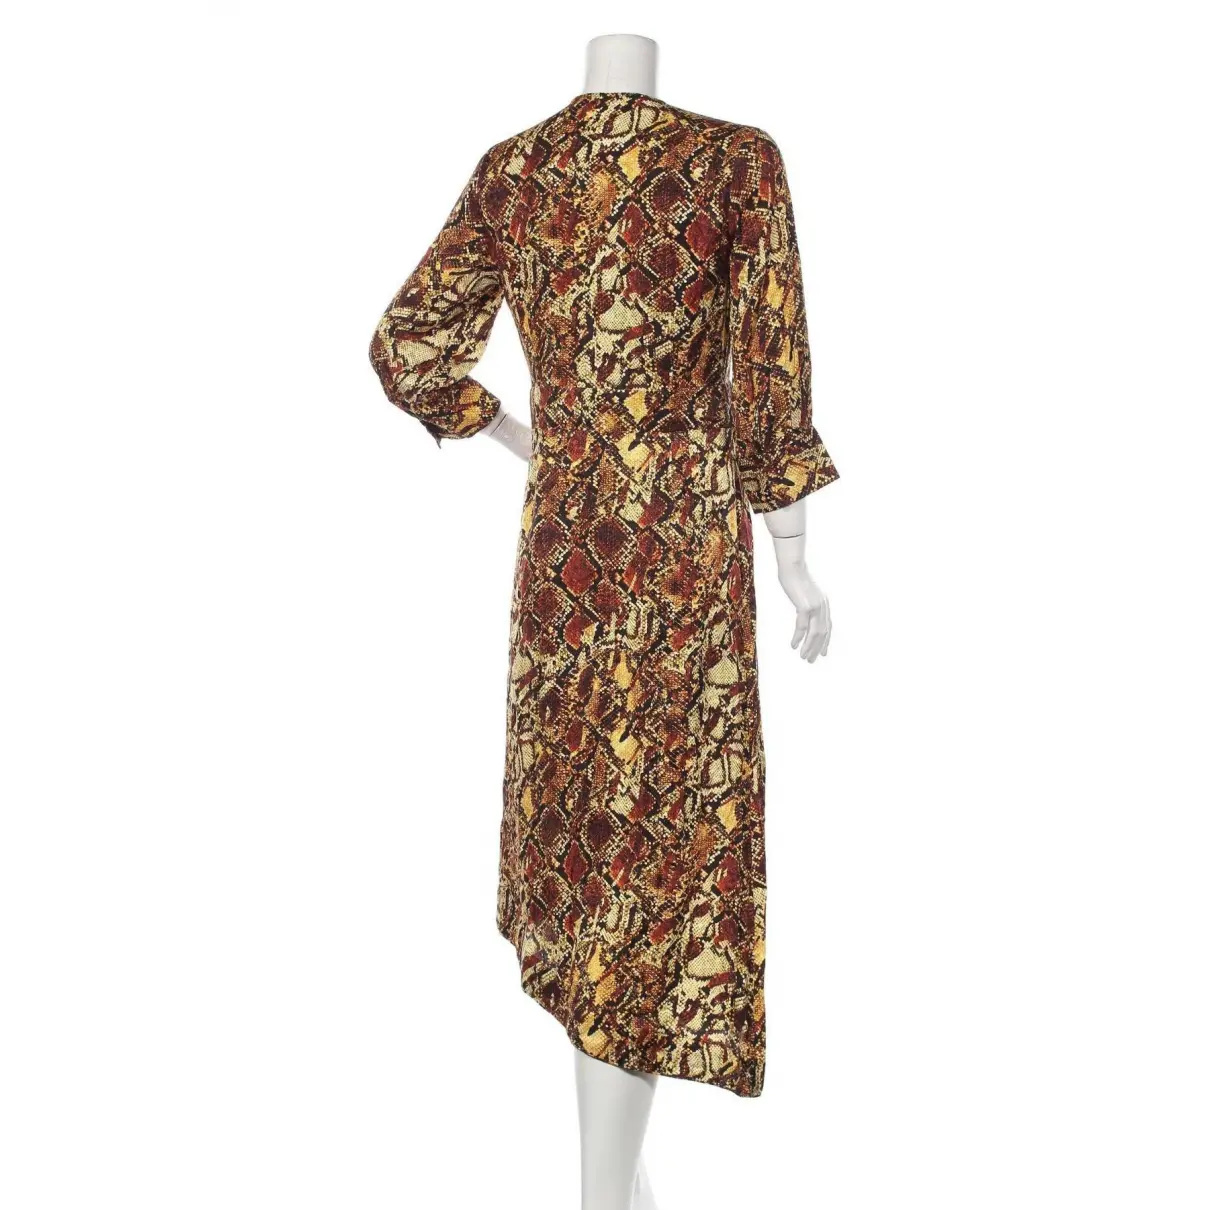 Buy Gestuz Mid-length dress online